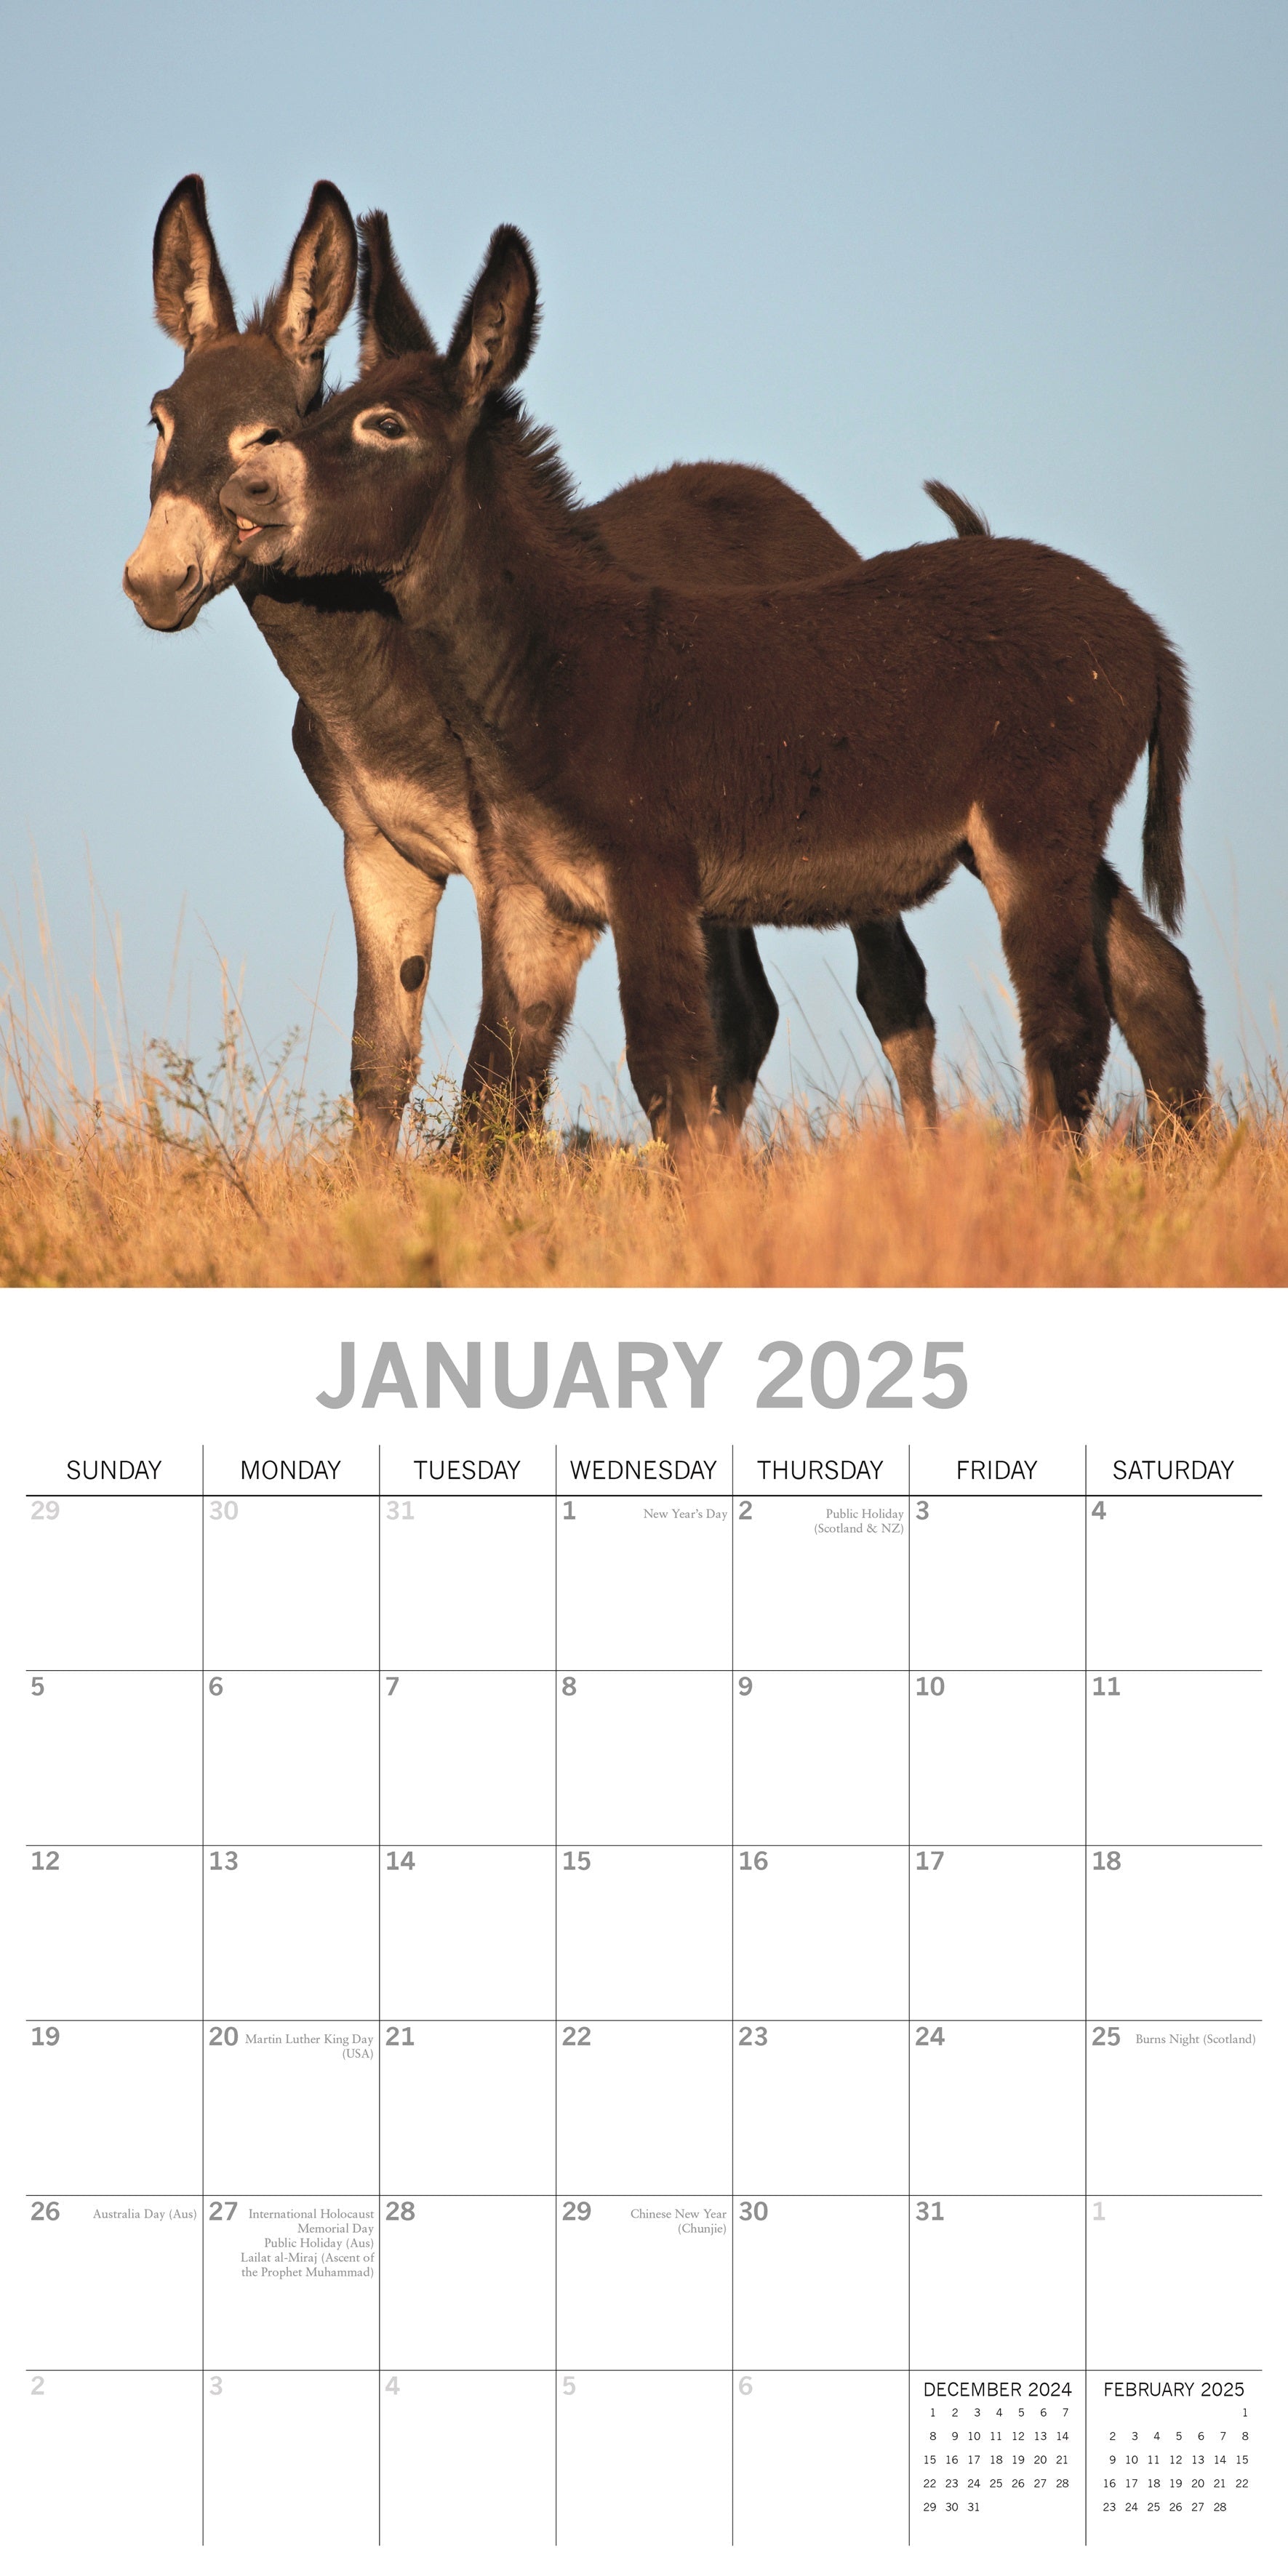 2025 Donkeys - Square Wall Calendar